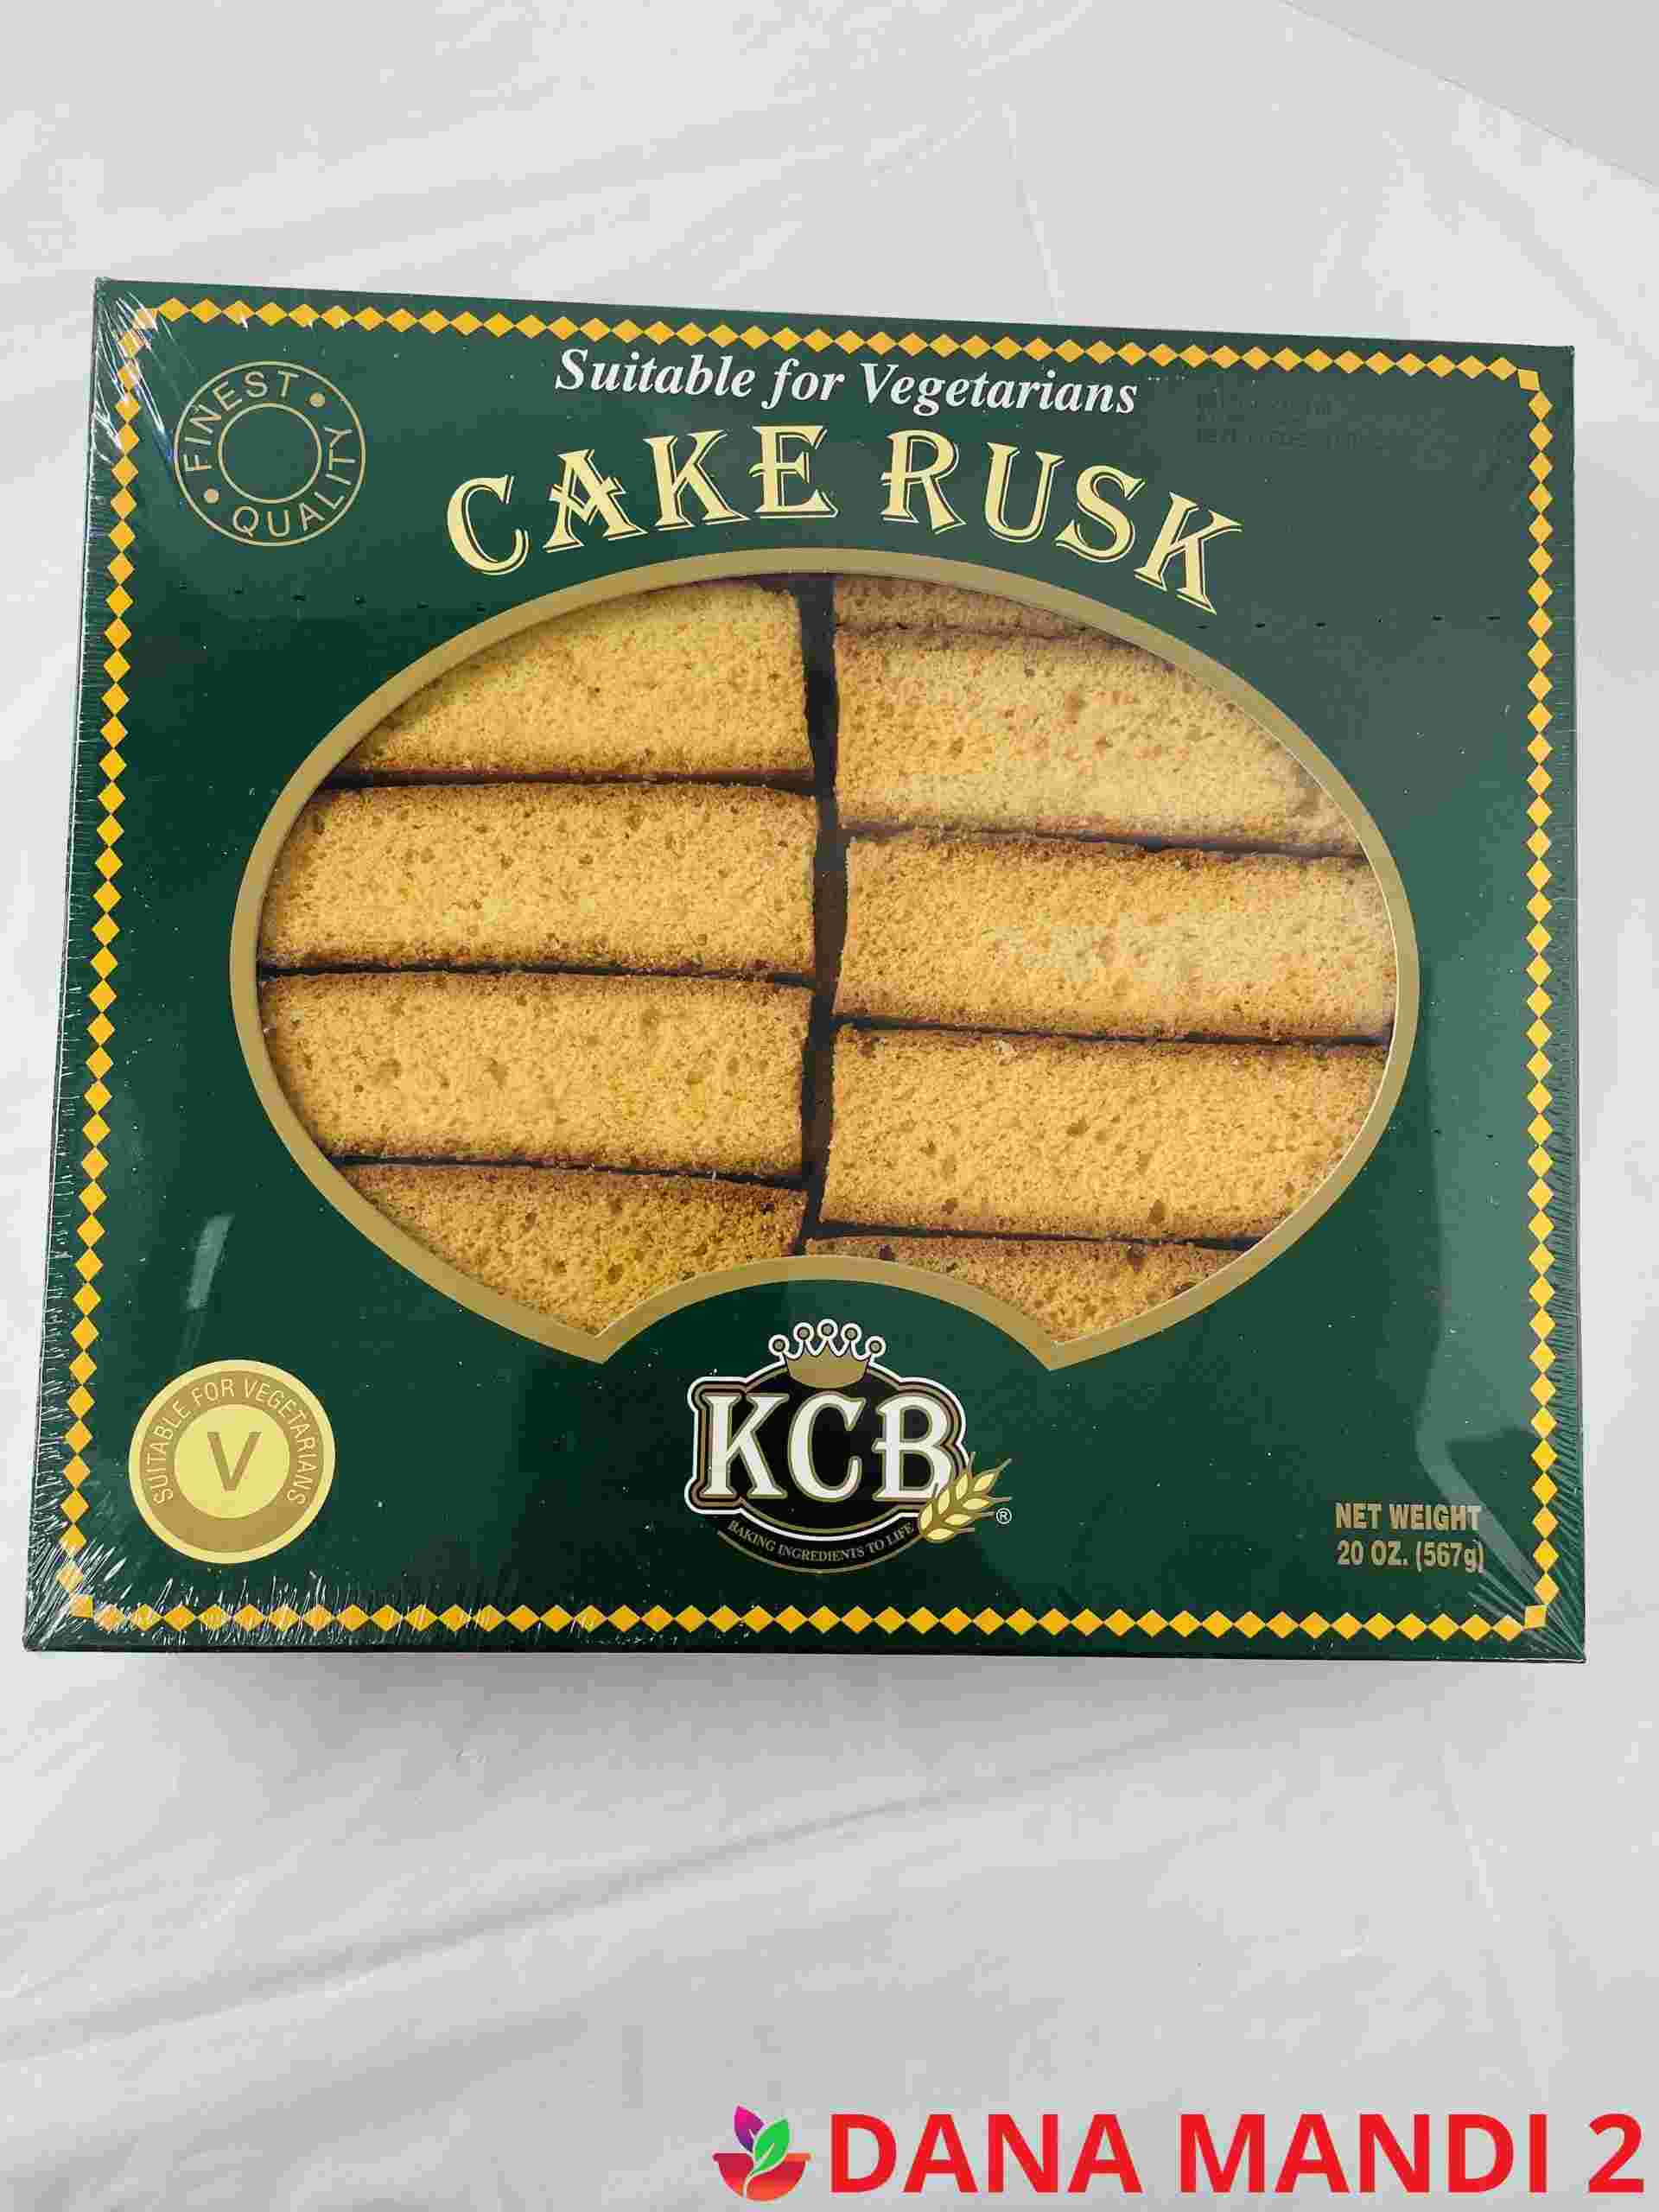 KCB Cake Rusk Sutable For Vegetarians (Green Box)